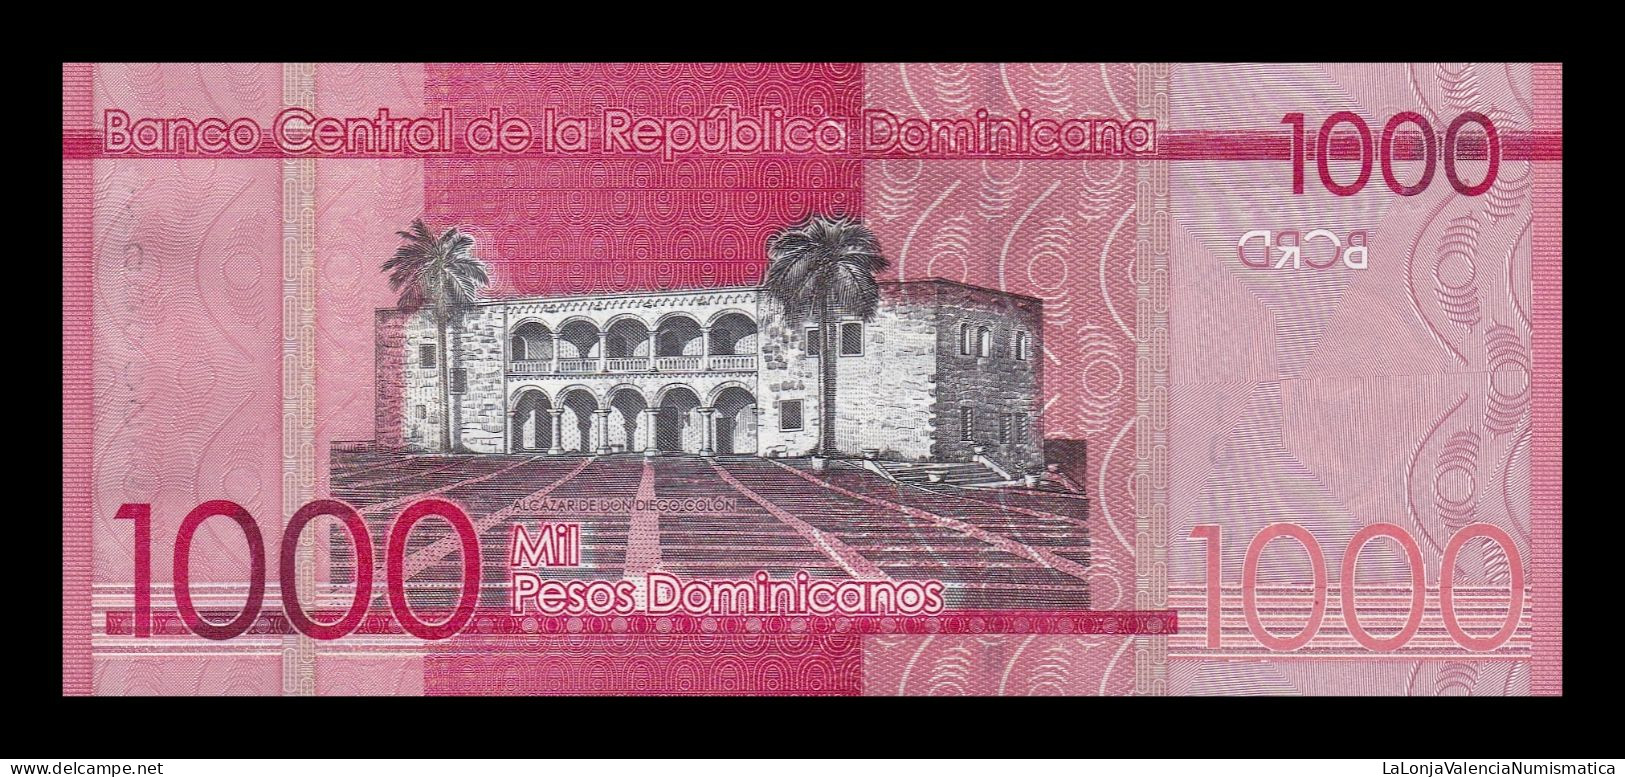 República Dominicana 1000 Pesos Dominicanos 2016 Pick 193c Low Serial 938 Sc Unc - Dominicana